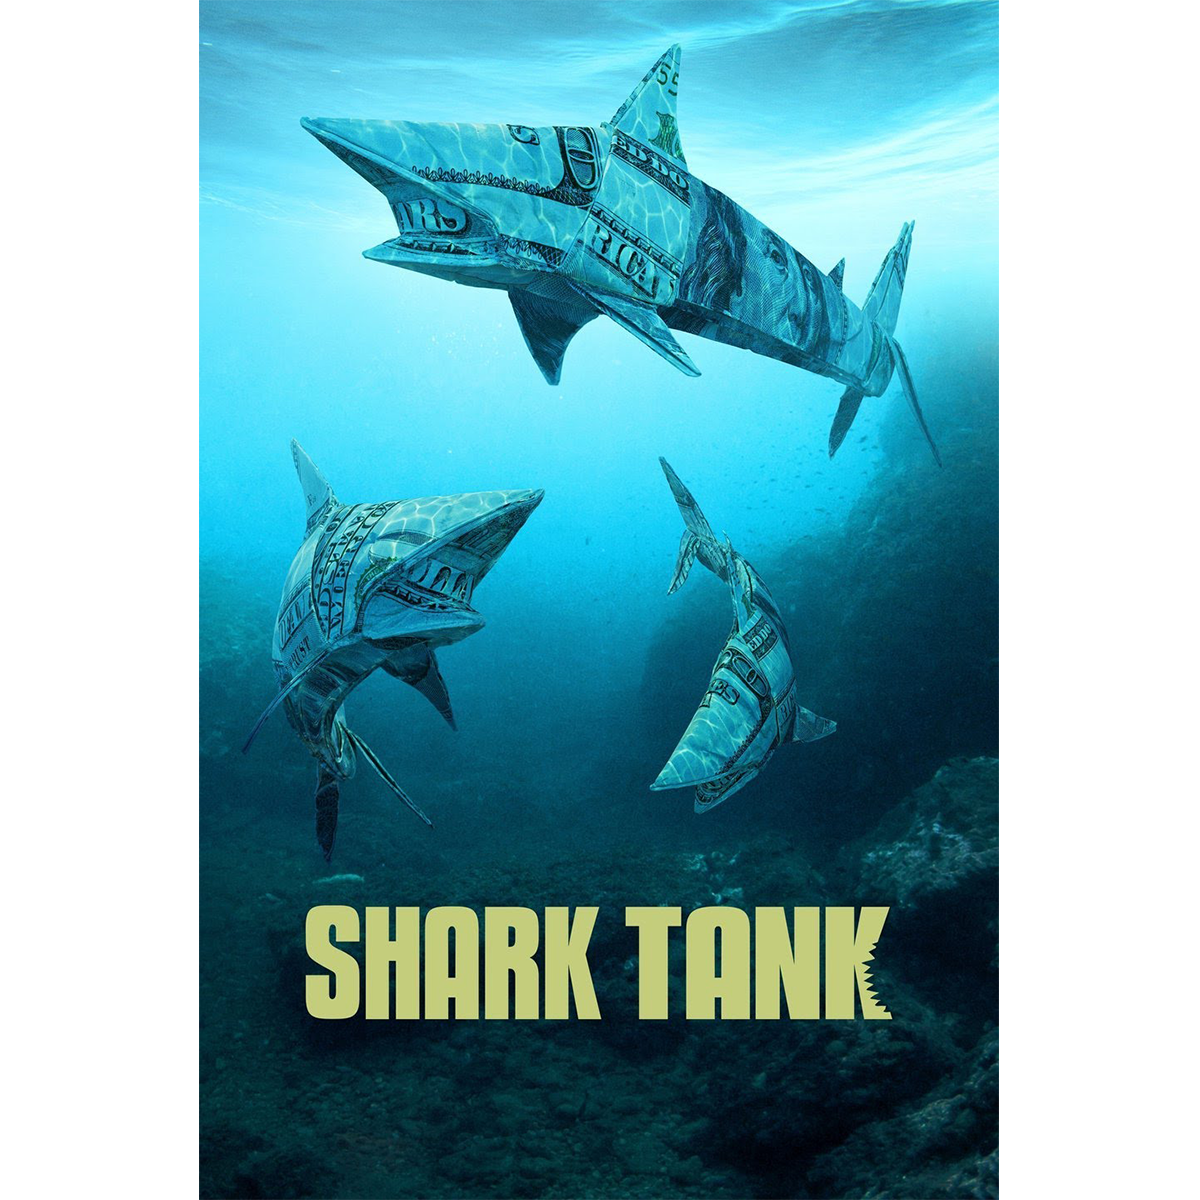 Shark tank